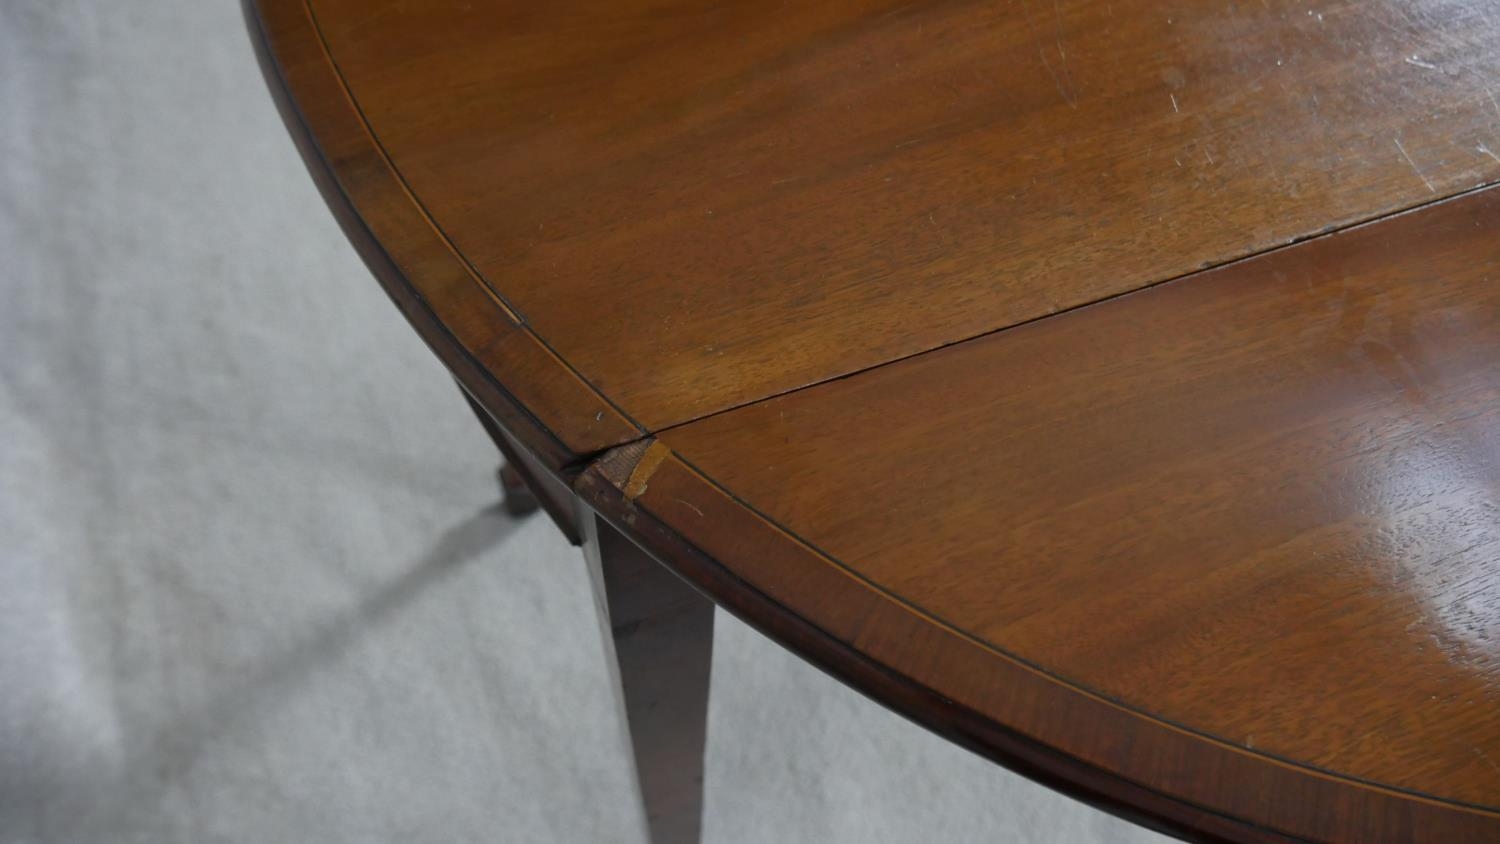 A 19th century mahogany Pembroke table with ebony and satinwood stringing raised on slender square - Image 6 of 6